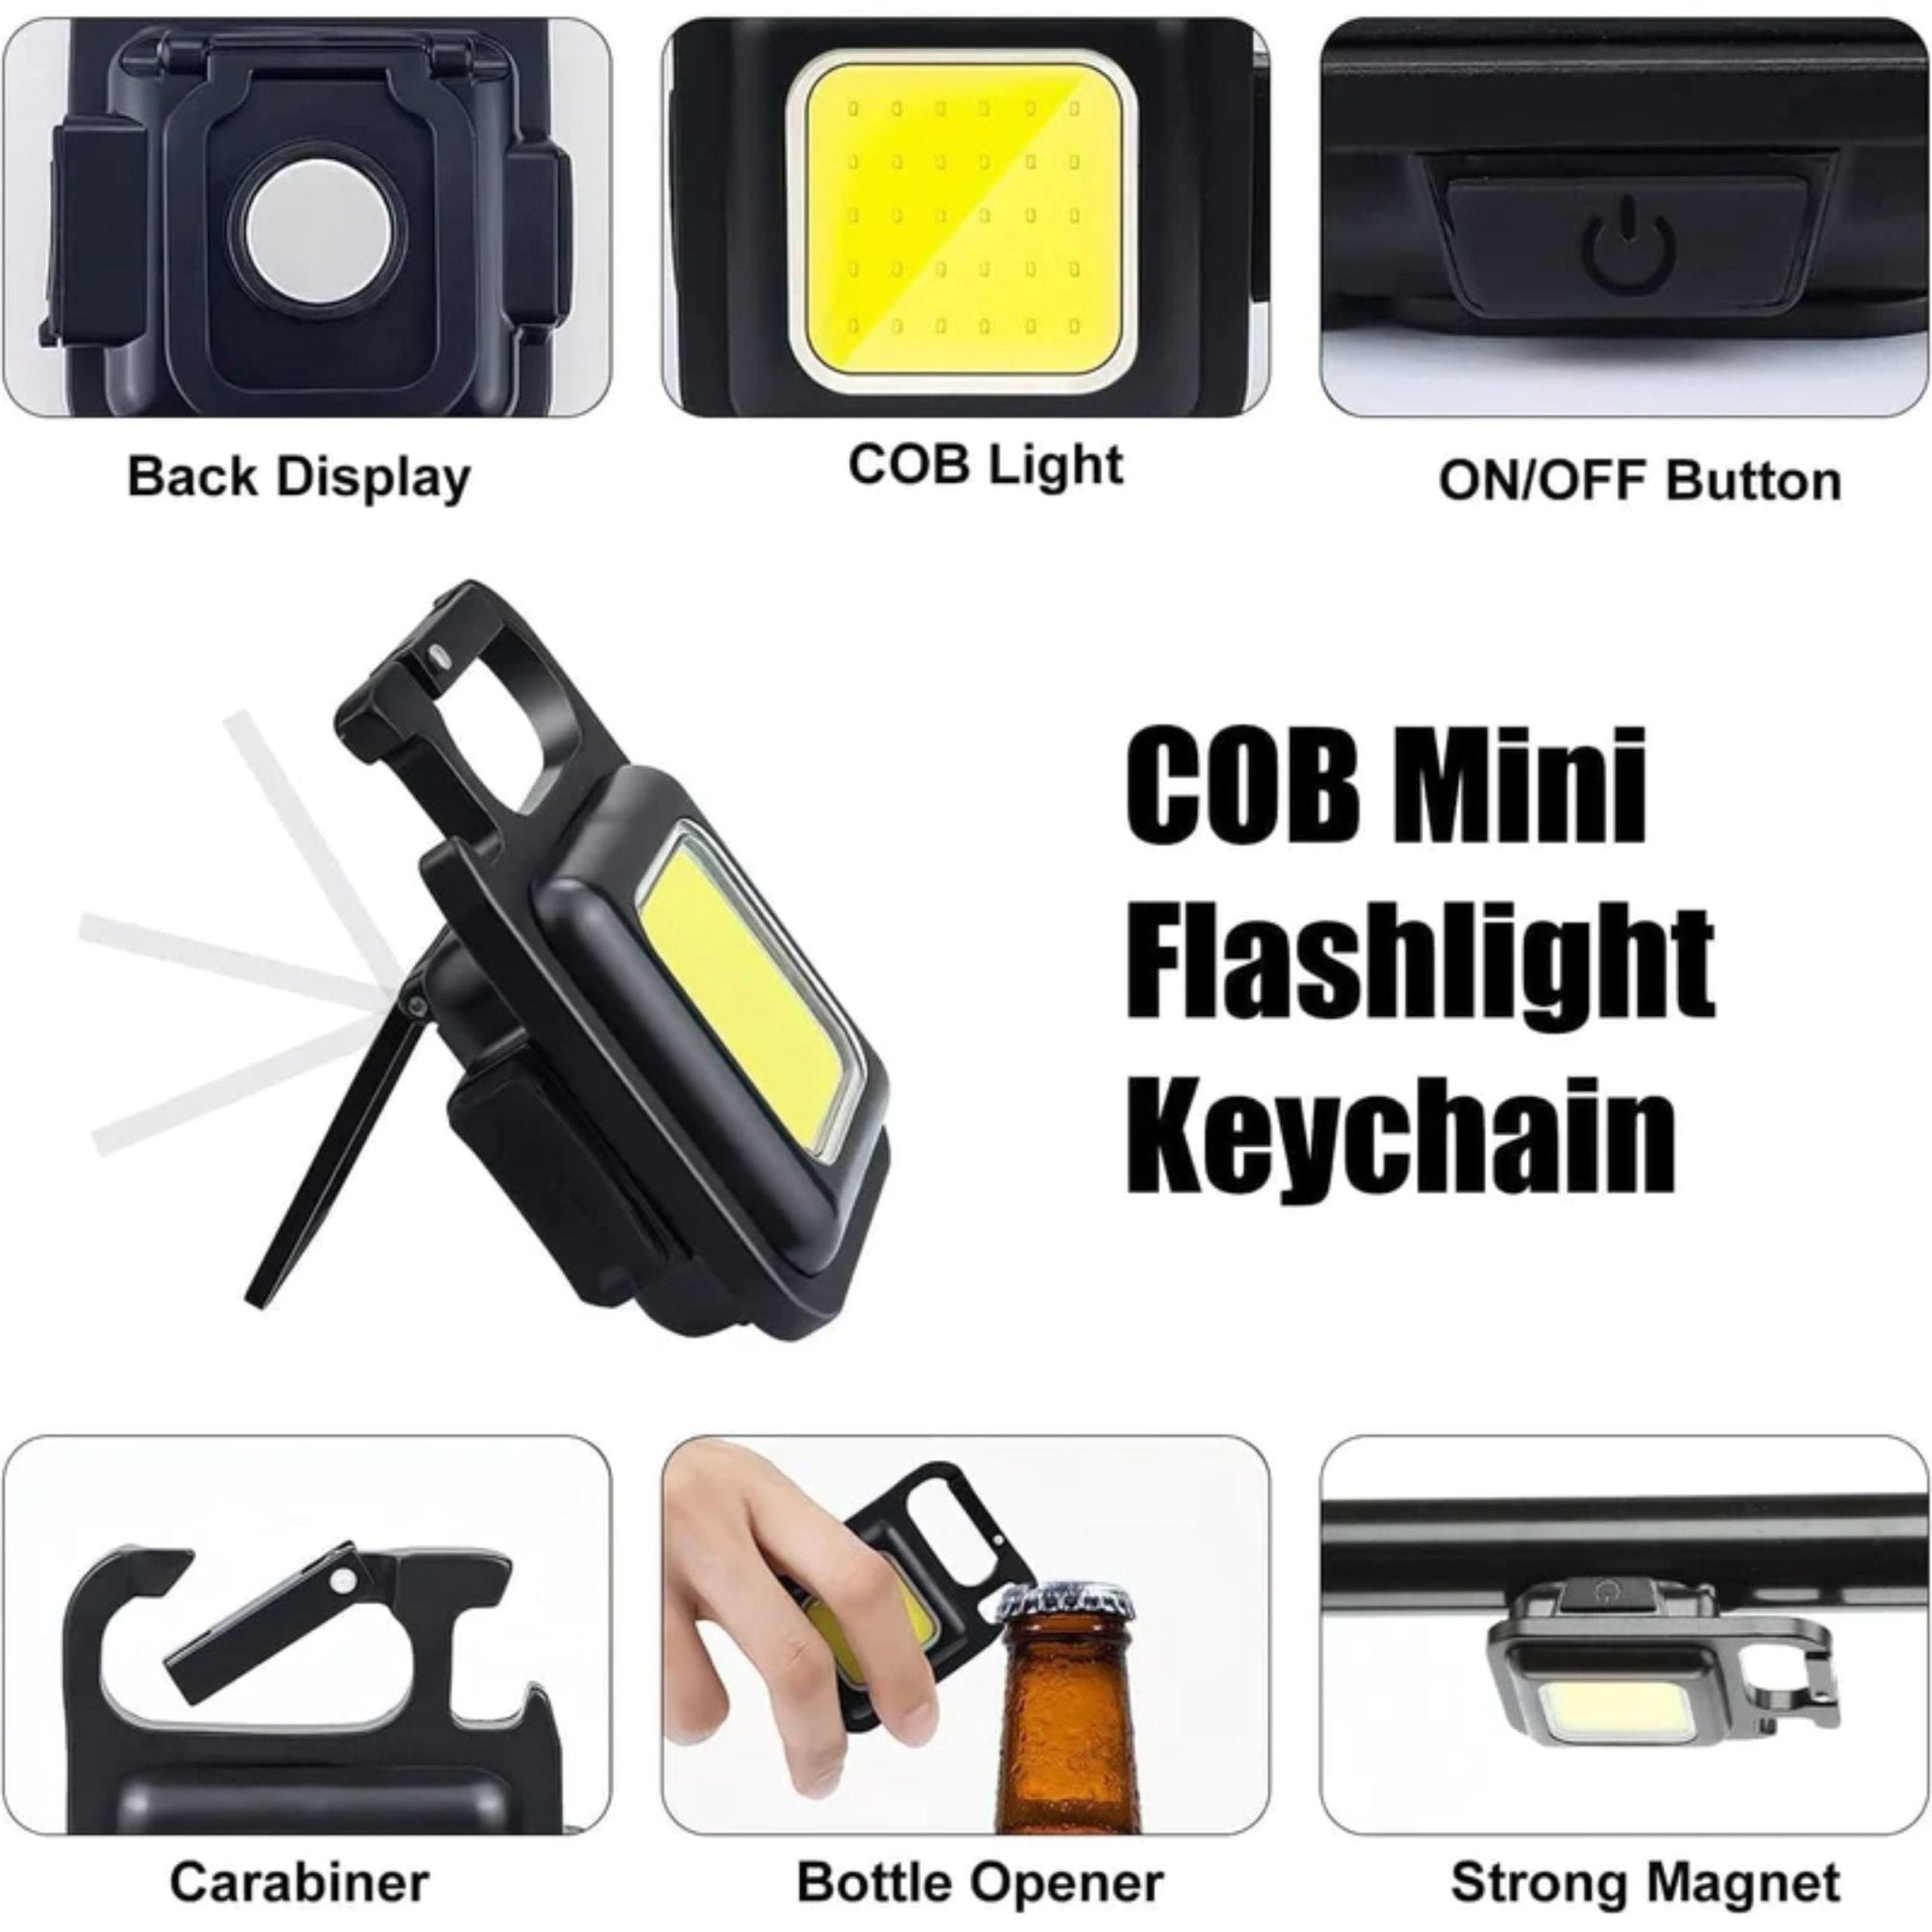 Cob Rechargeable Keychain Light - Black